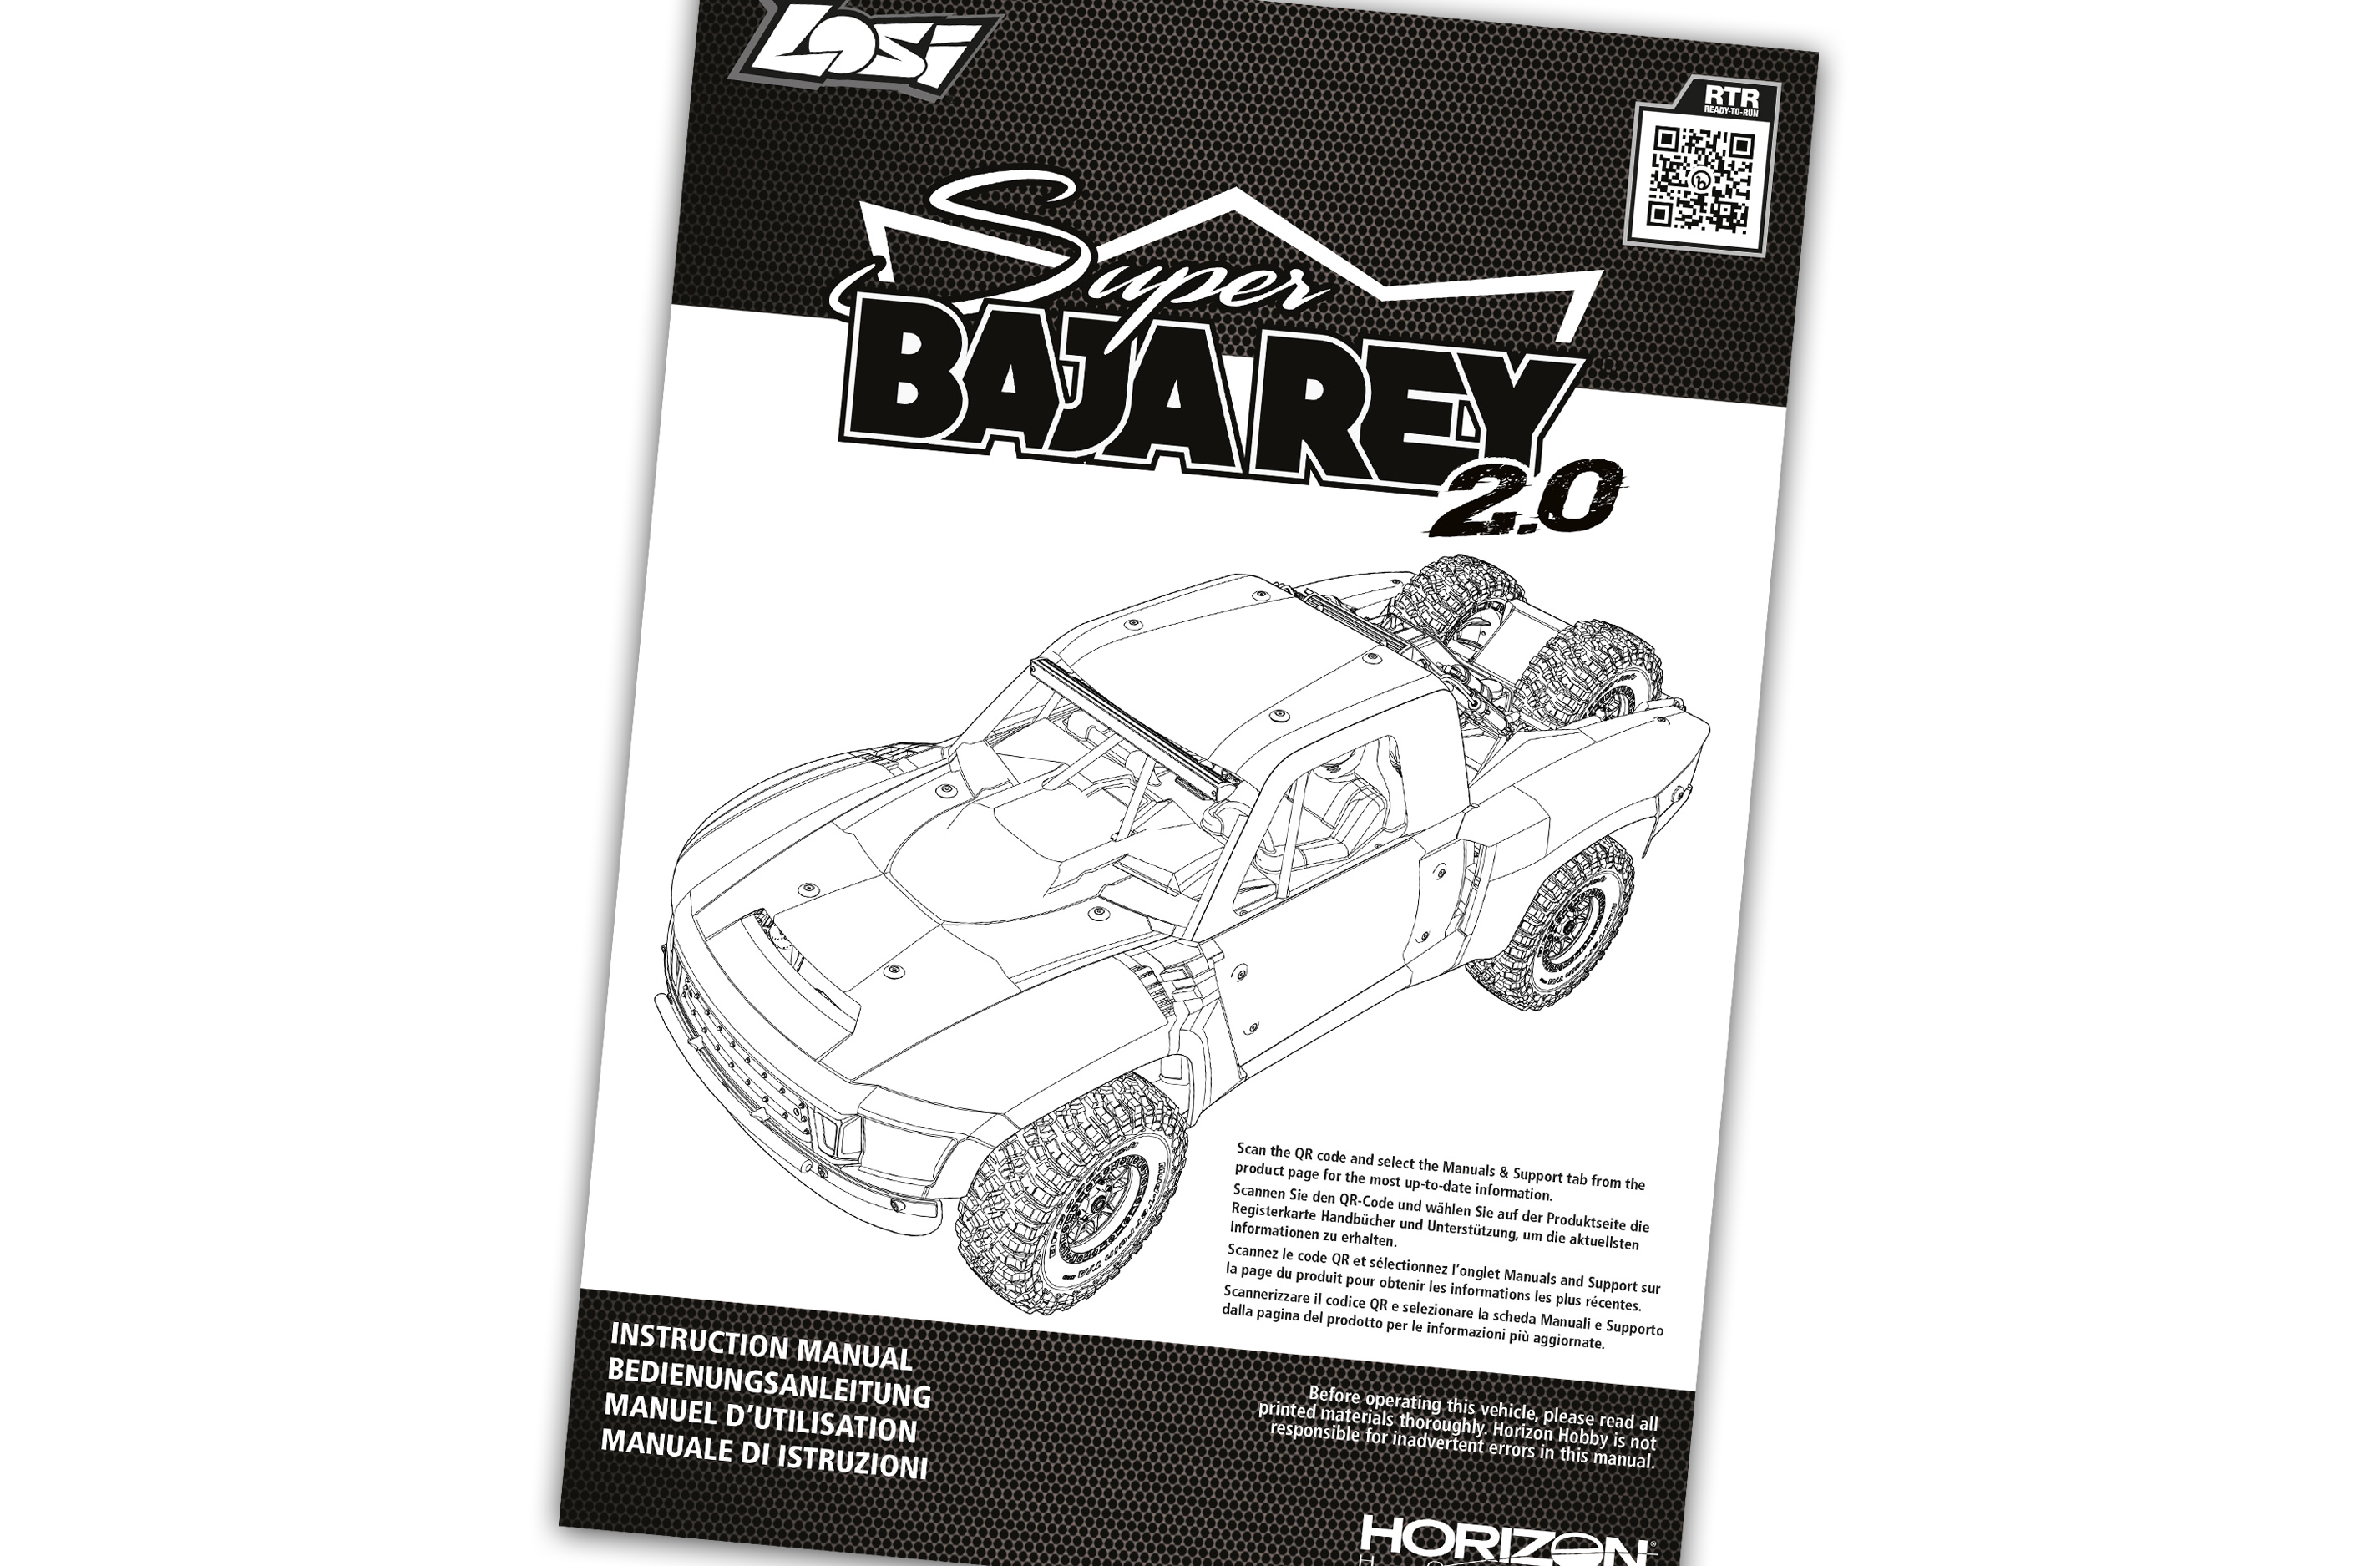 LOS05001/05 Instruction Manual for Baja Rey 2.0